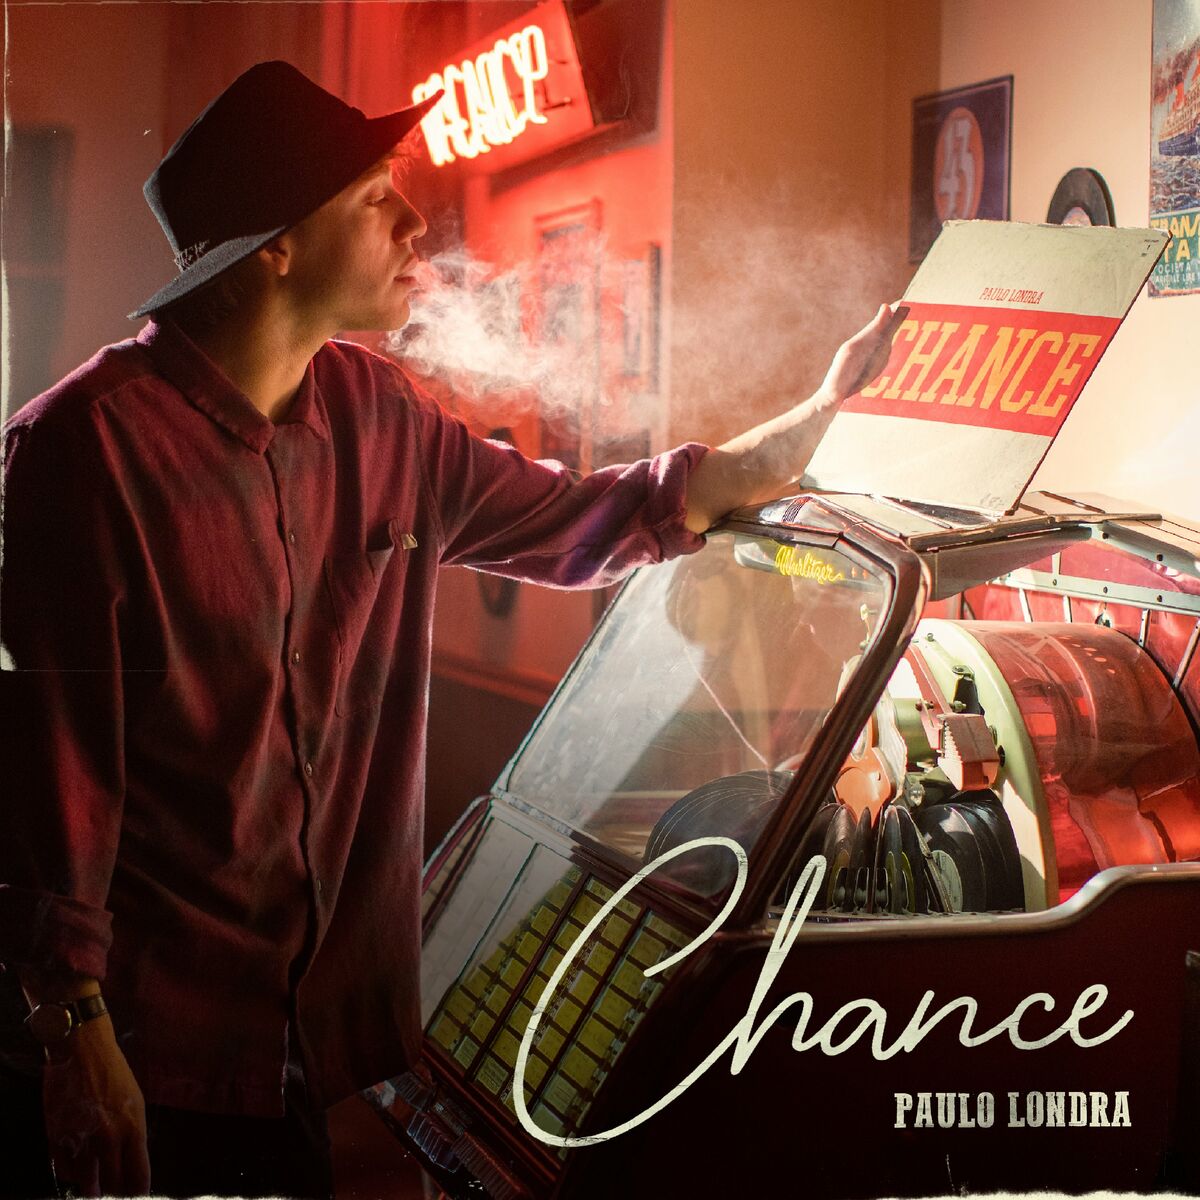 Paulo Londra - Chance.mp3